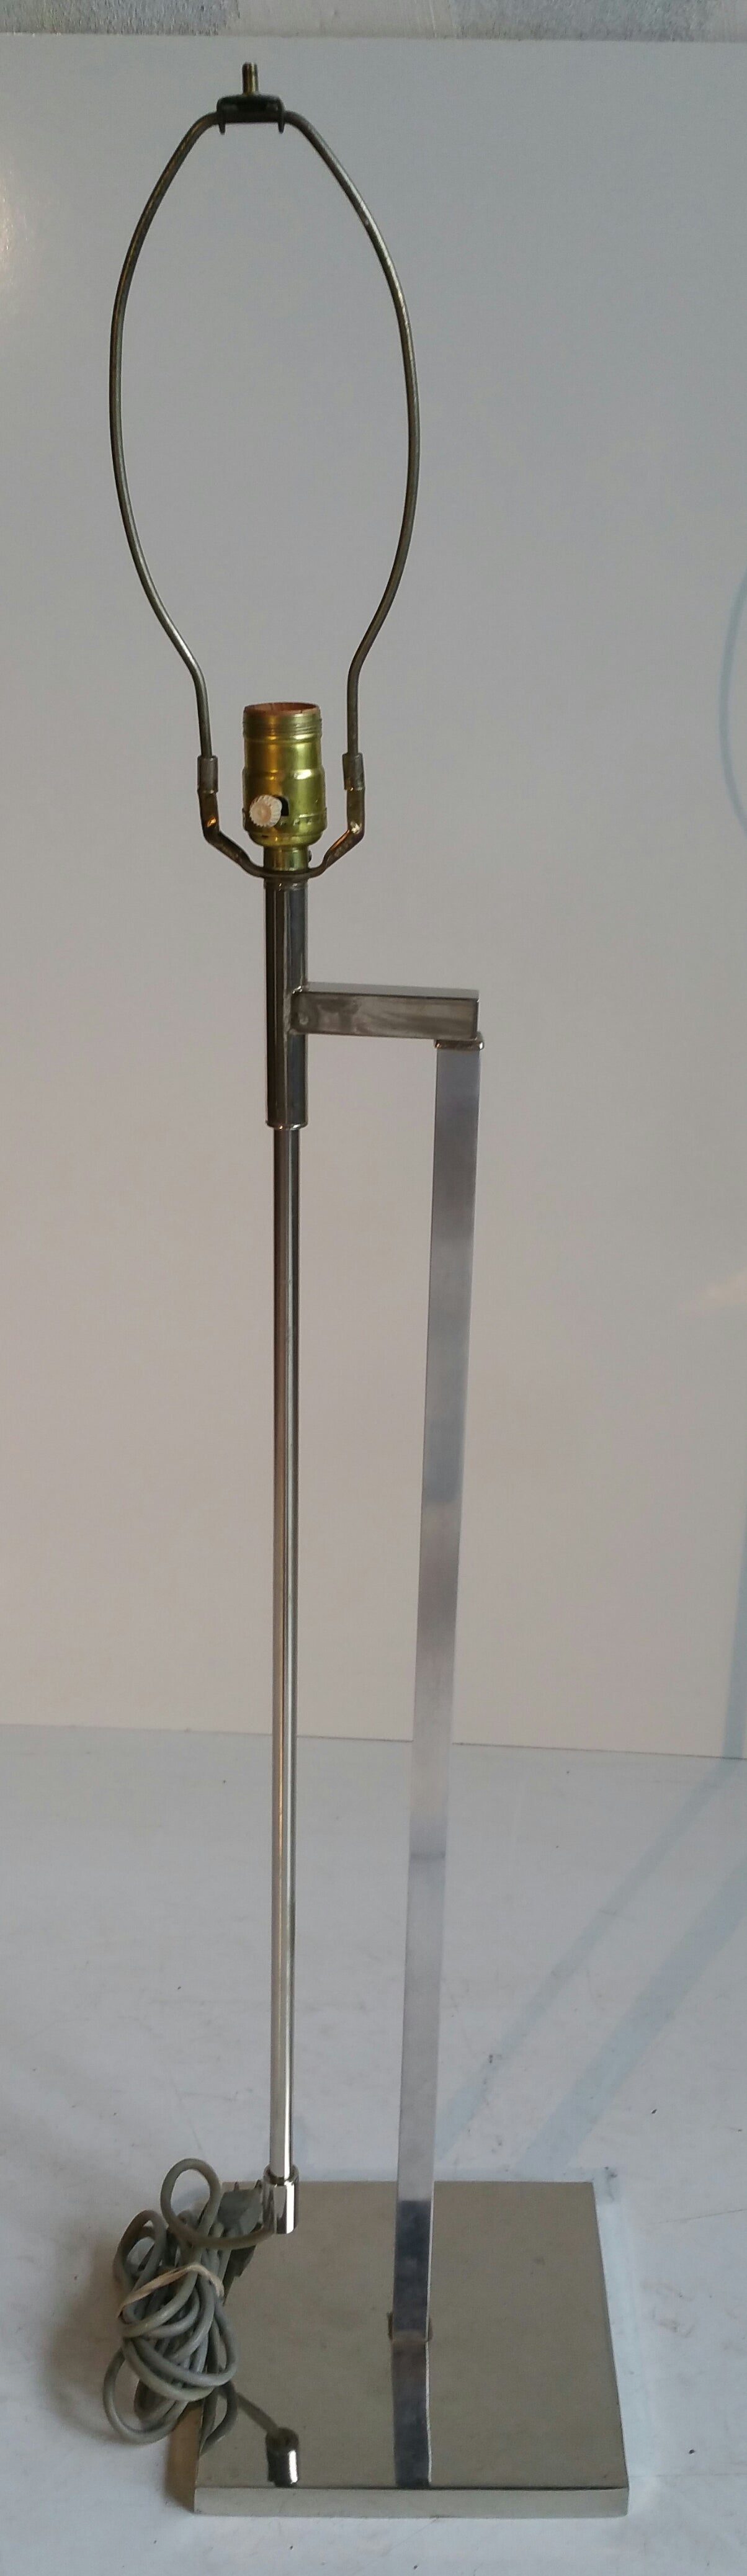 American Laurel Adjustable and Rotating Chrome Steel Floor Lamp